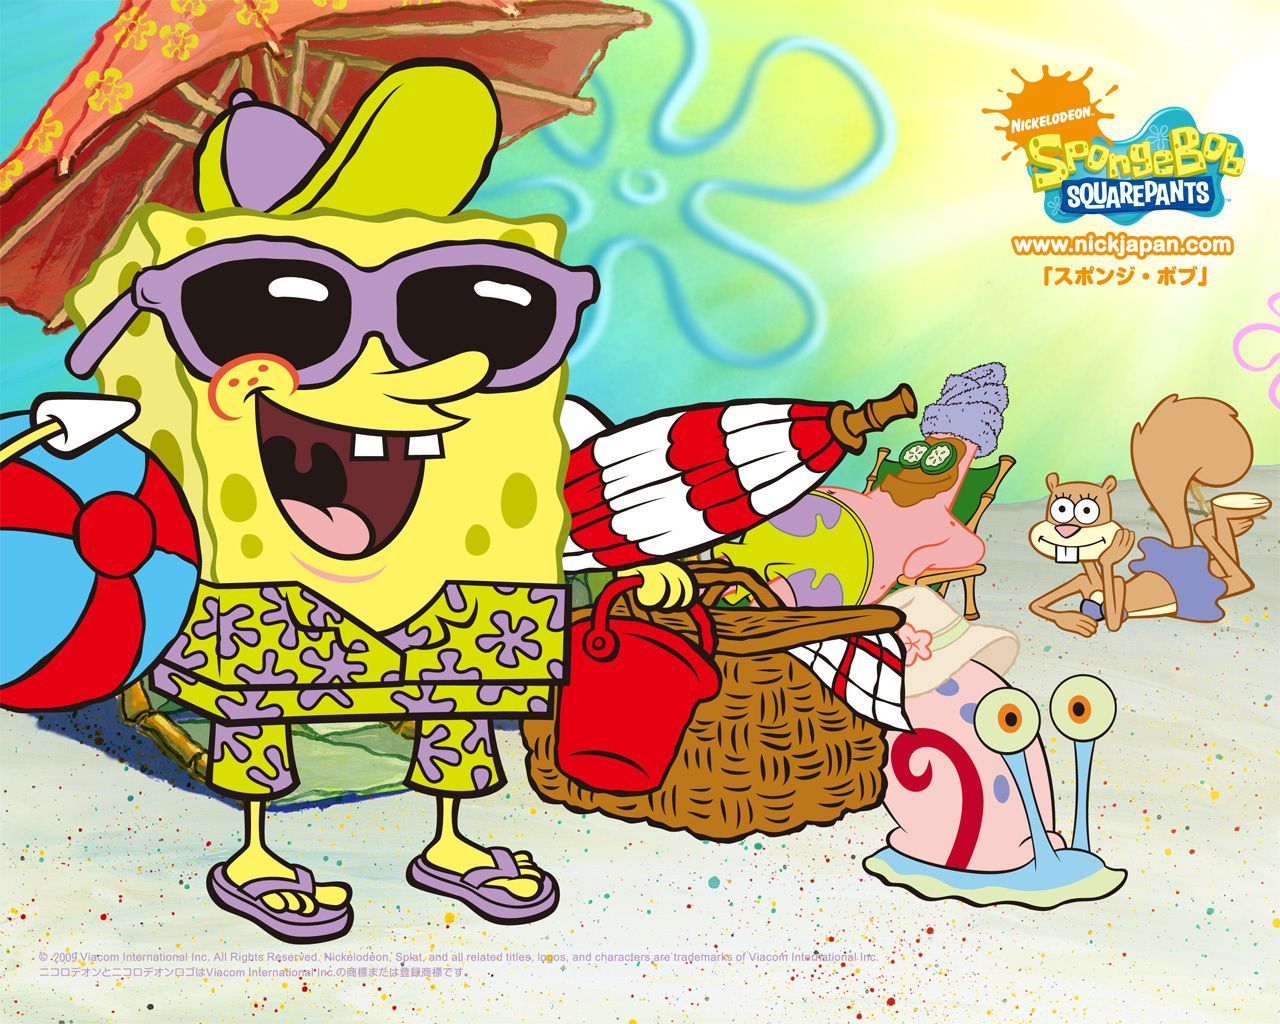 Spongebob Squarepants Wallpaper: Summer. Spongebob drawings, Spongebob squarepants cartoons, Spongebob